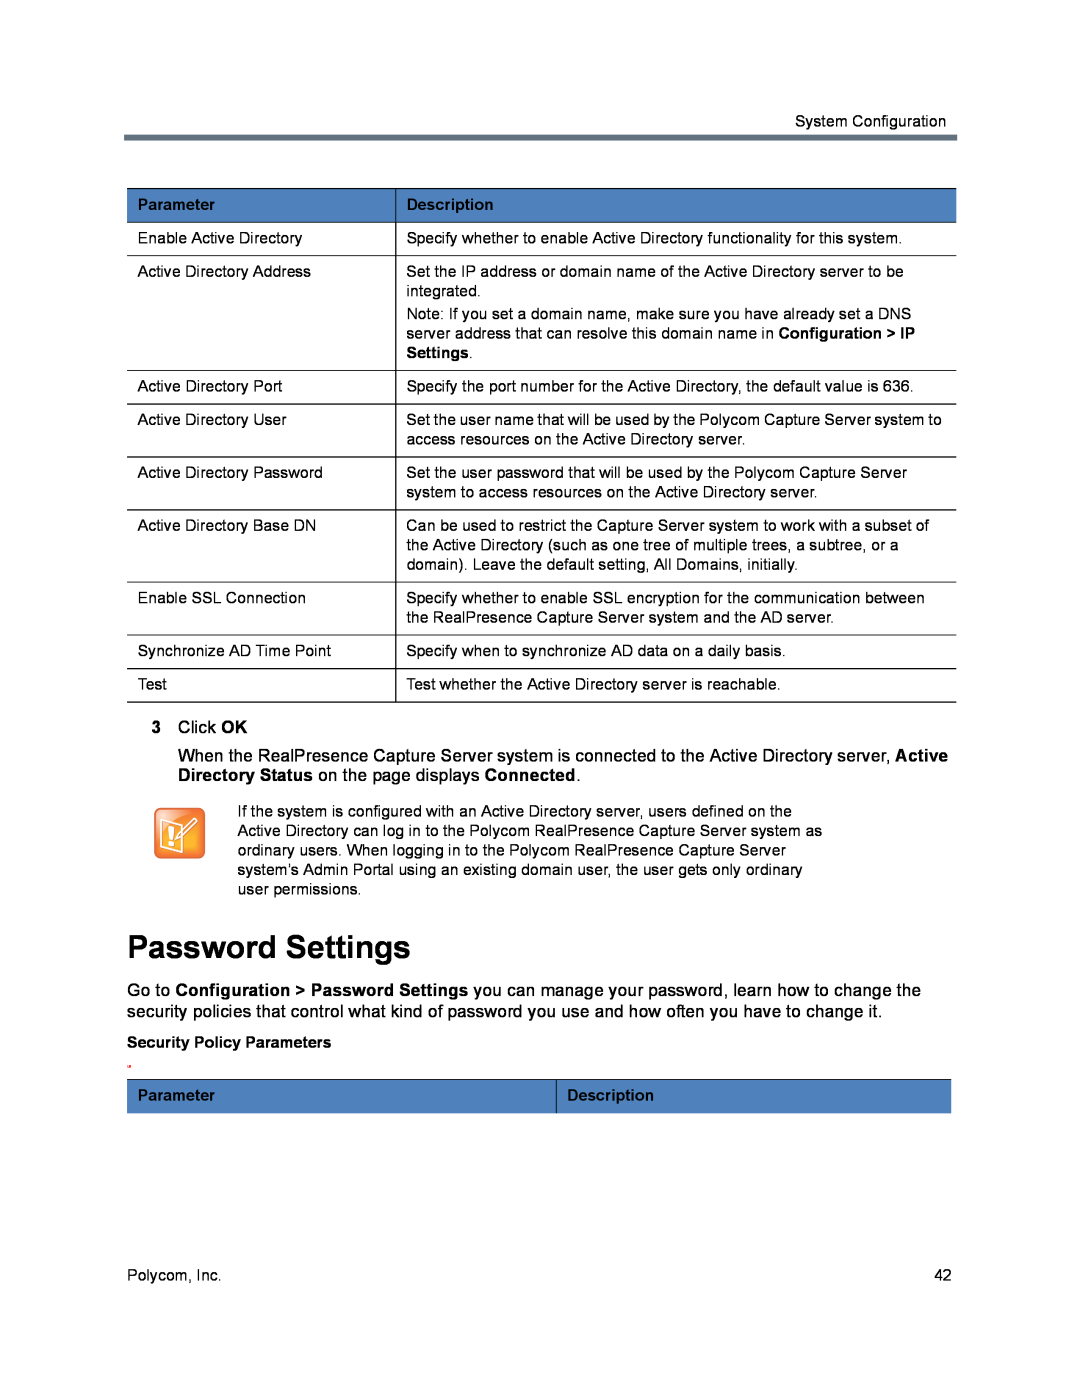 Polycom 40/0 manual Password Settings 